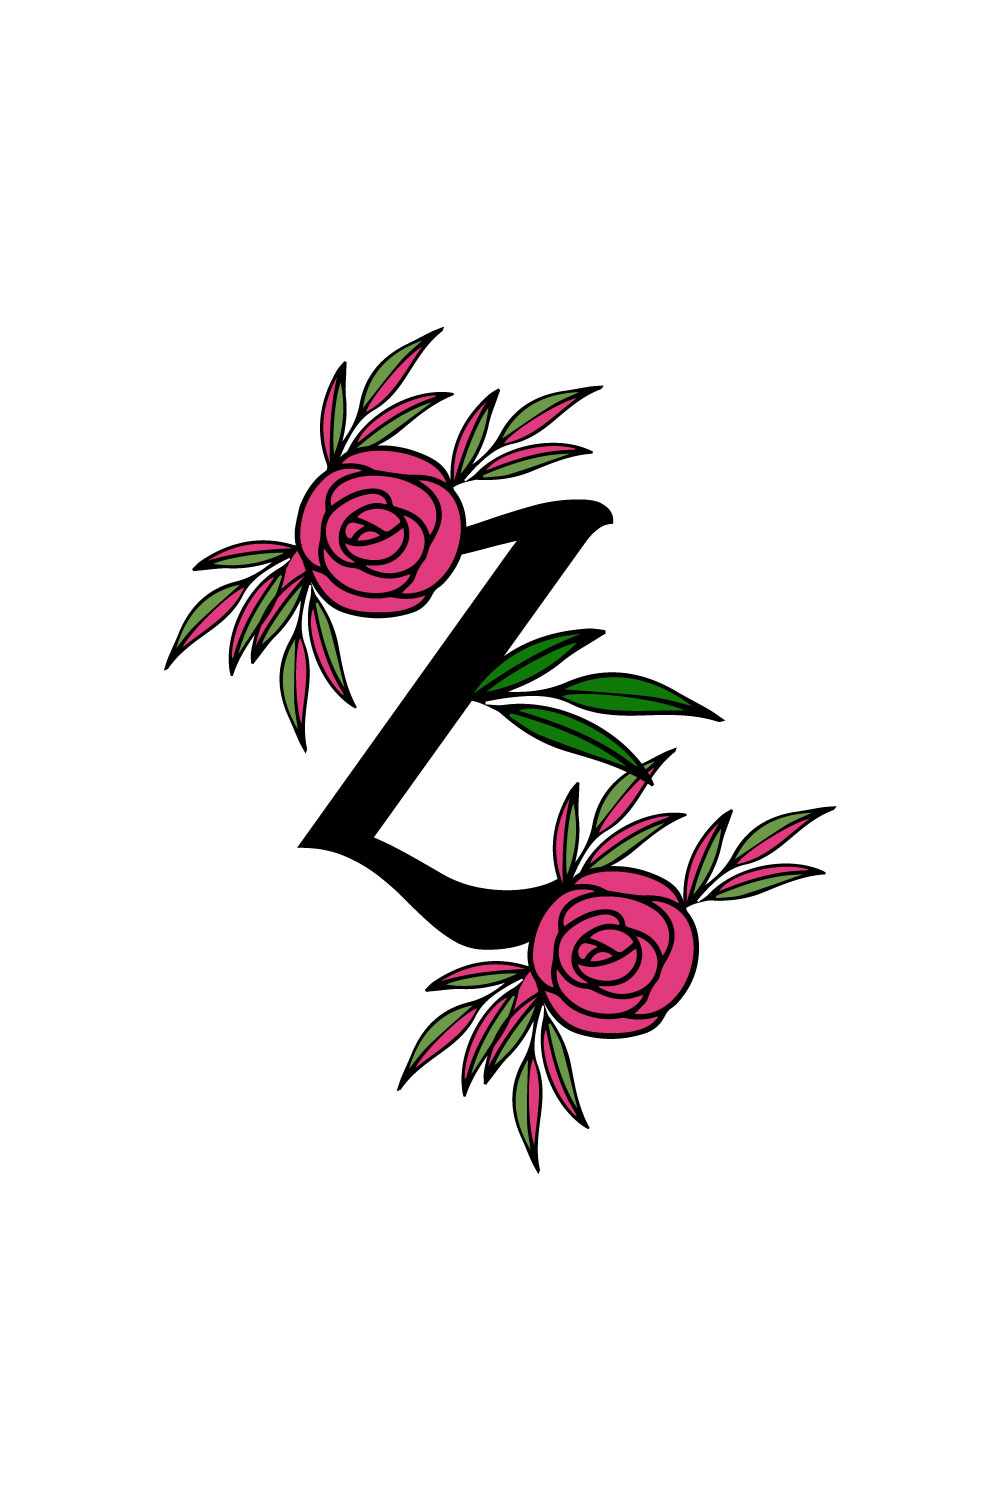 Free Rosey Z letter logo pinterest preview image.